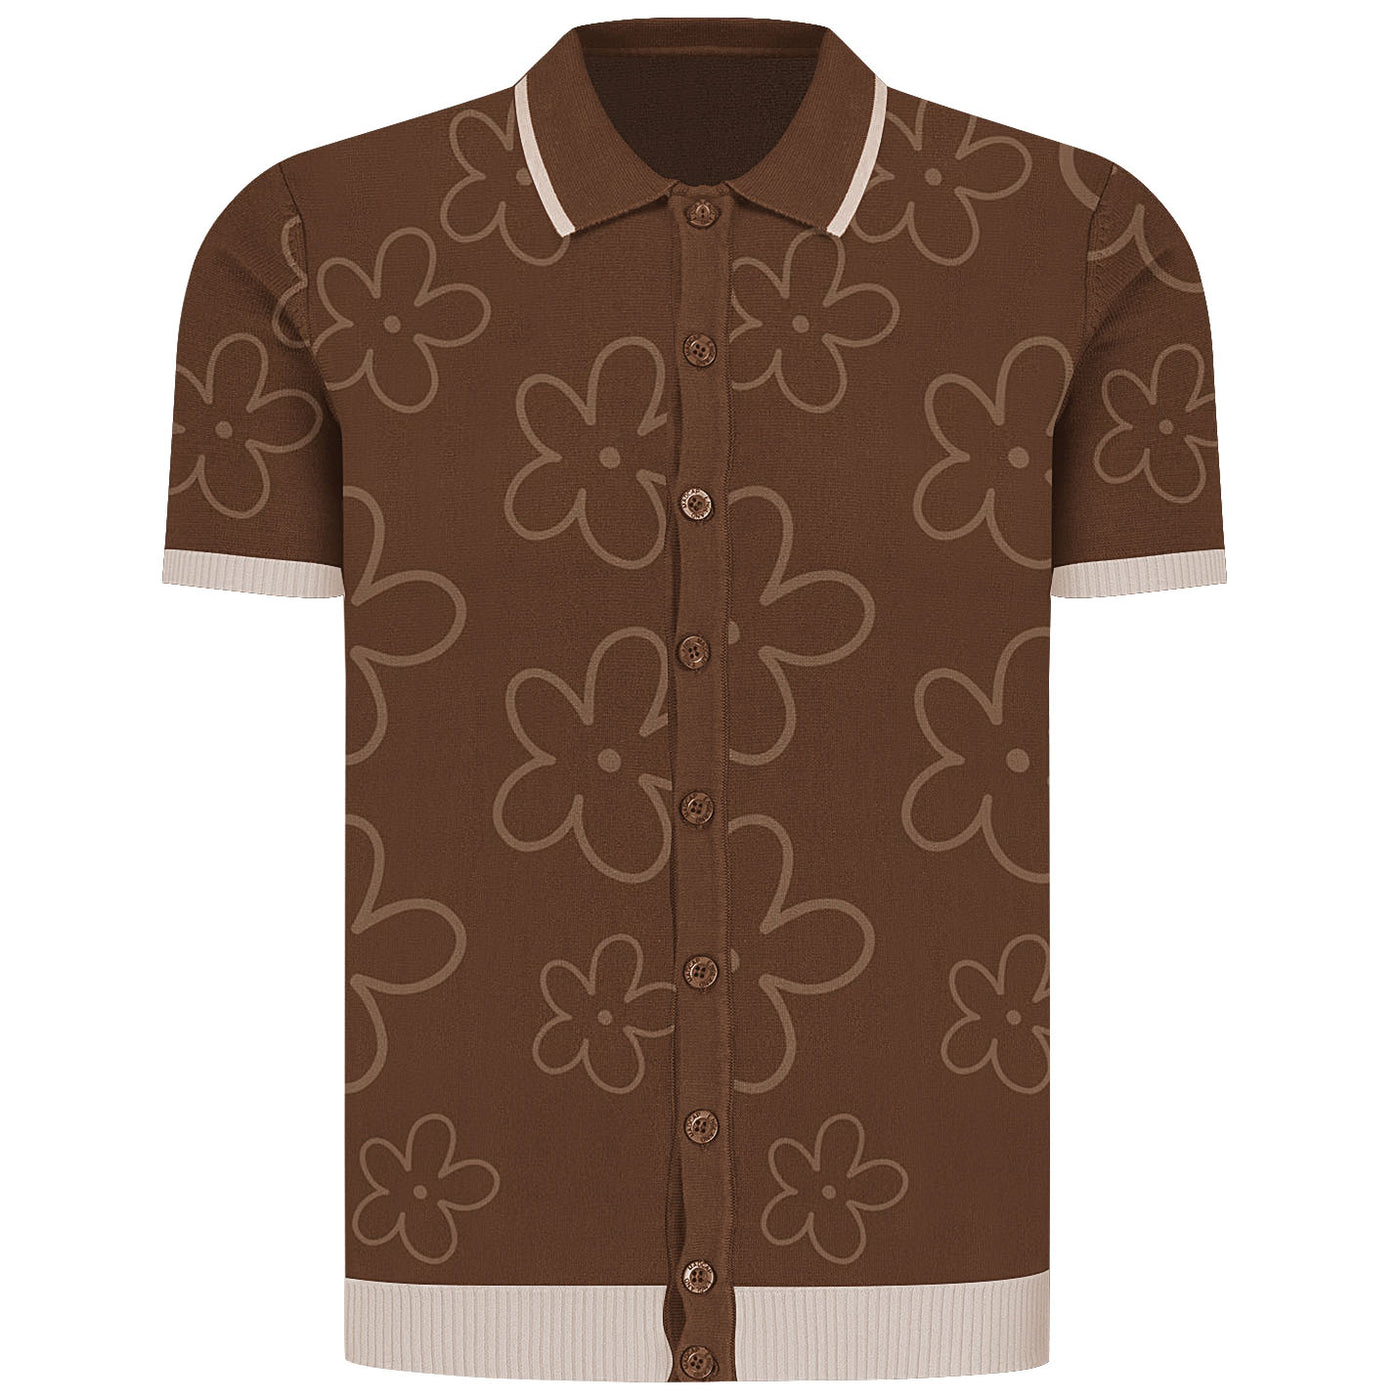 Men's brown flower cardigan polo shirt